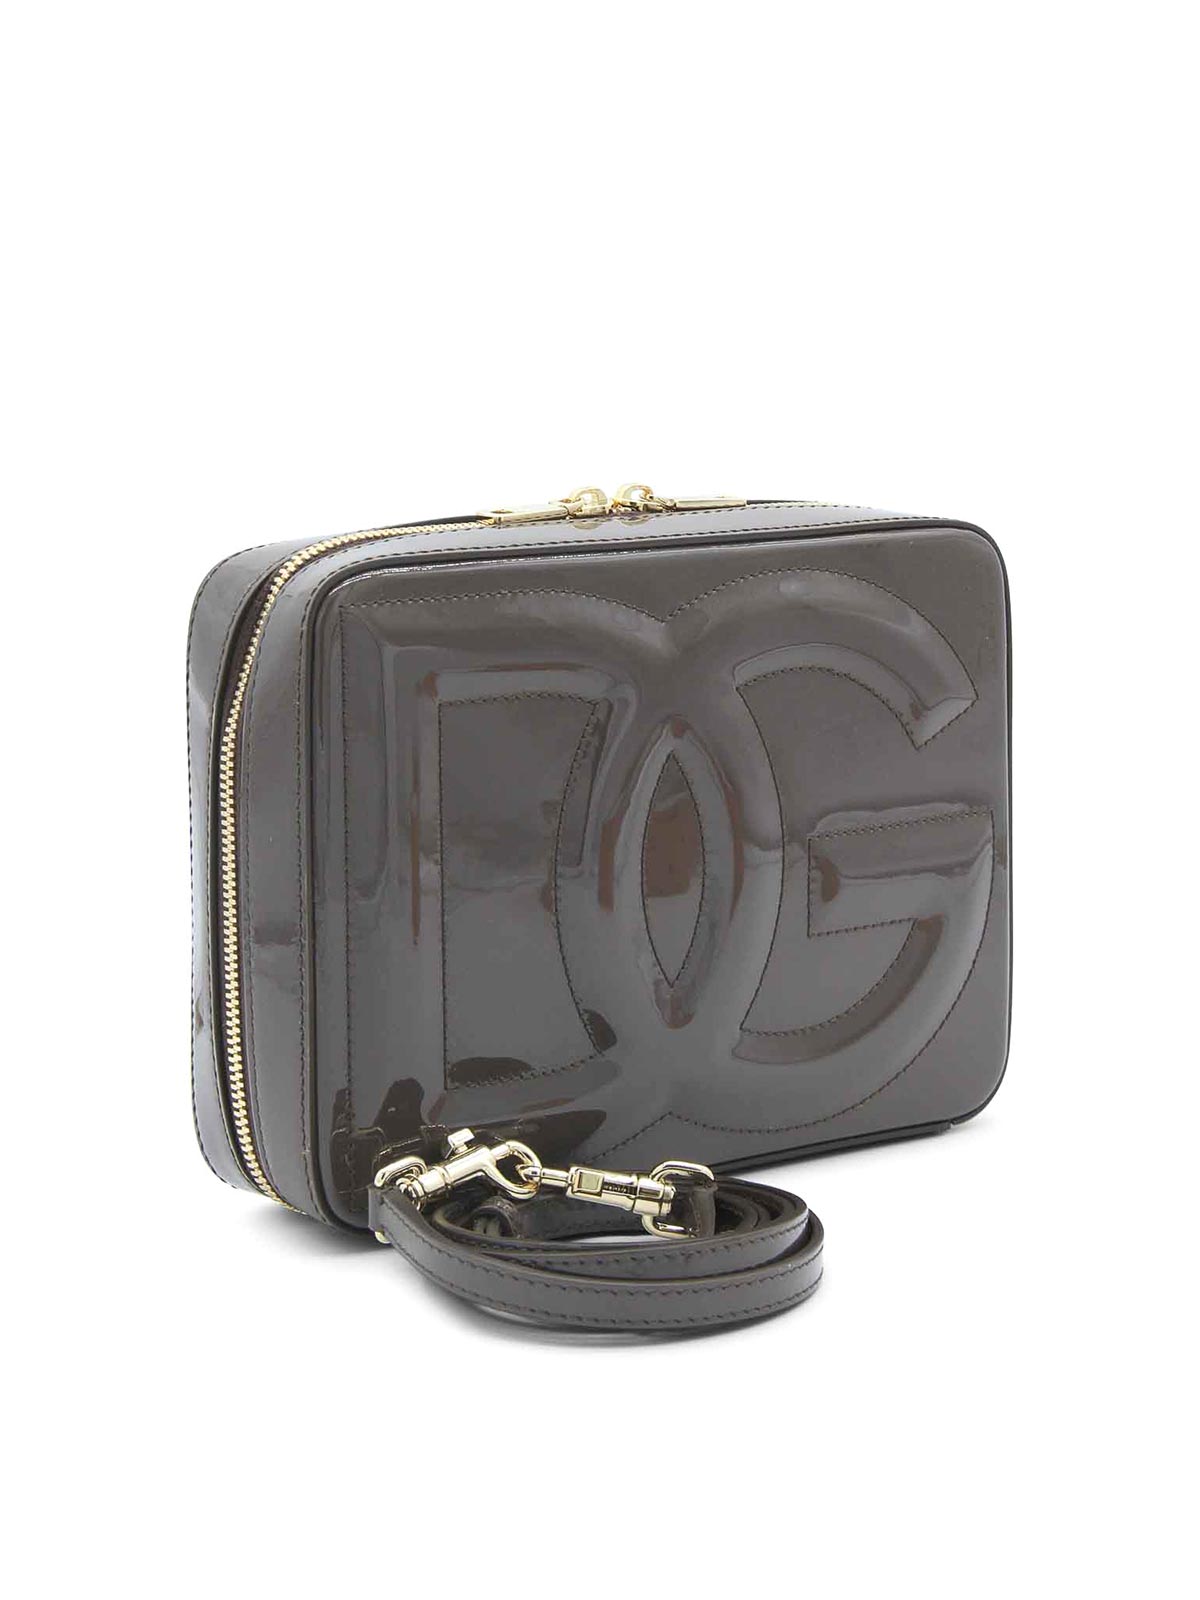 Dolce & Gabbana Small Leather Logo Camera Bag